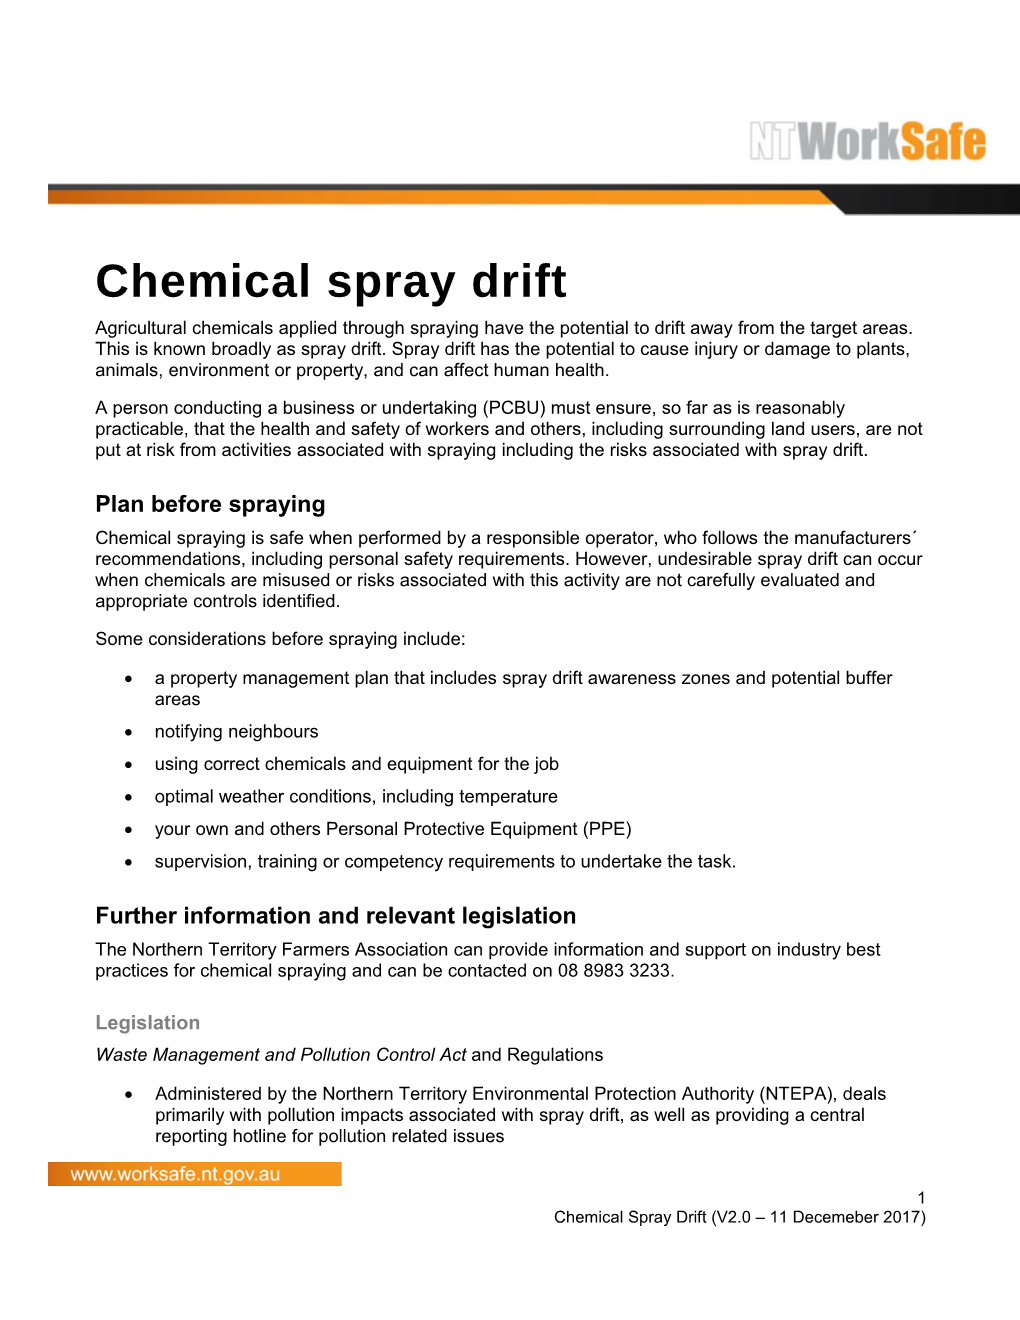 Chemical Spray Drift